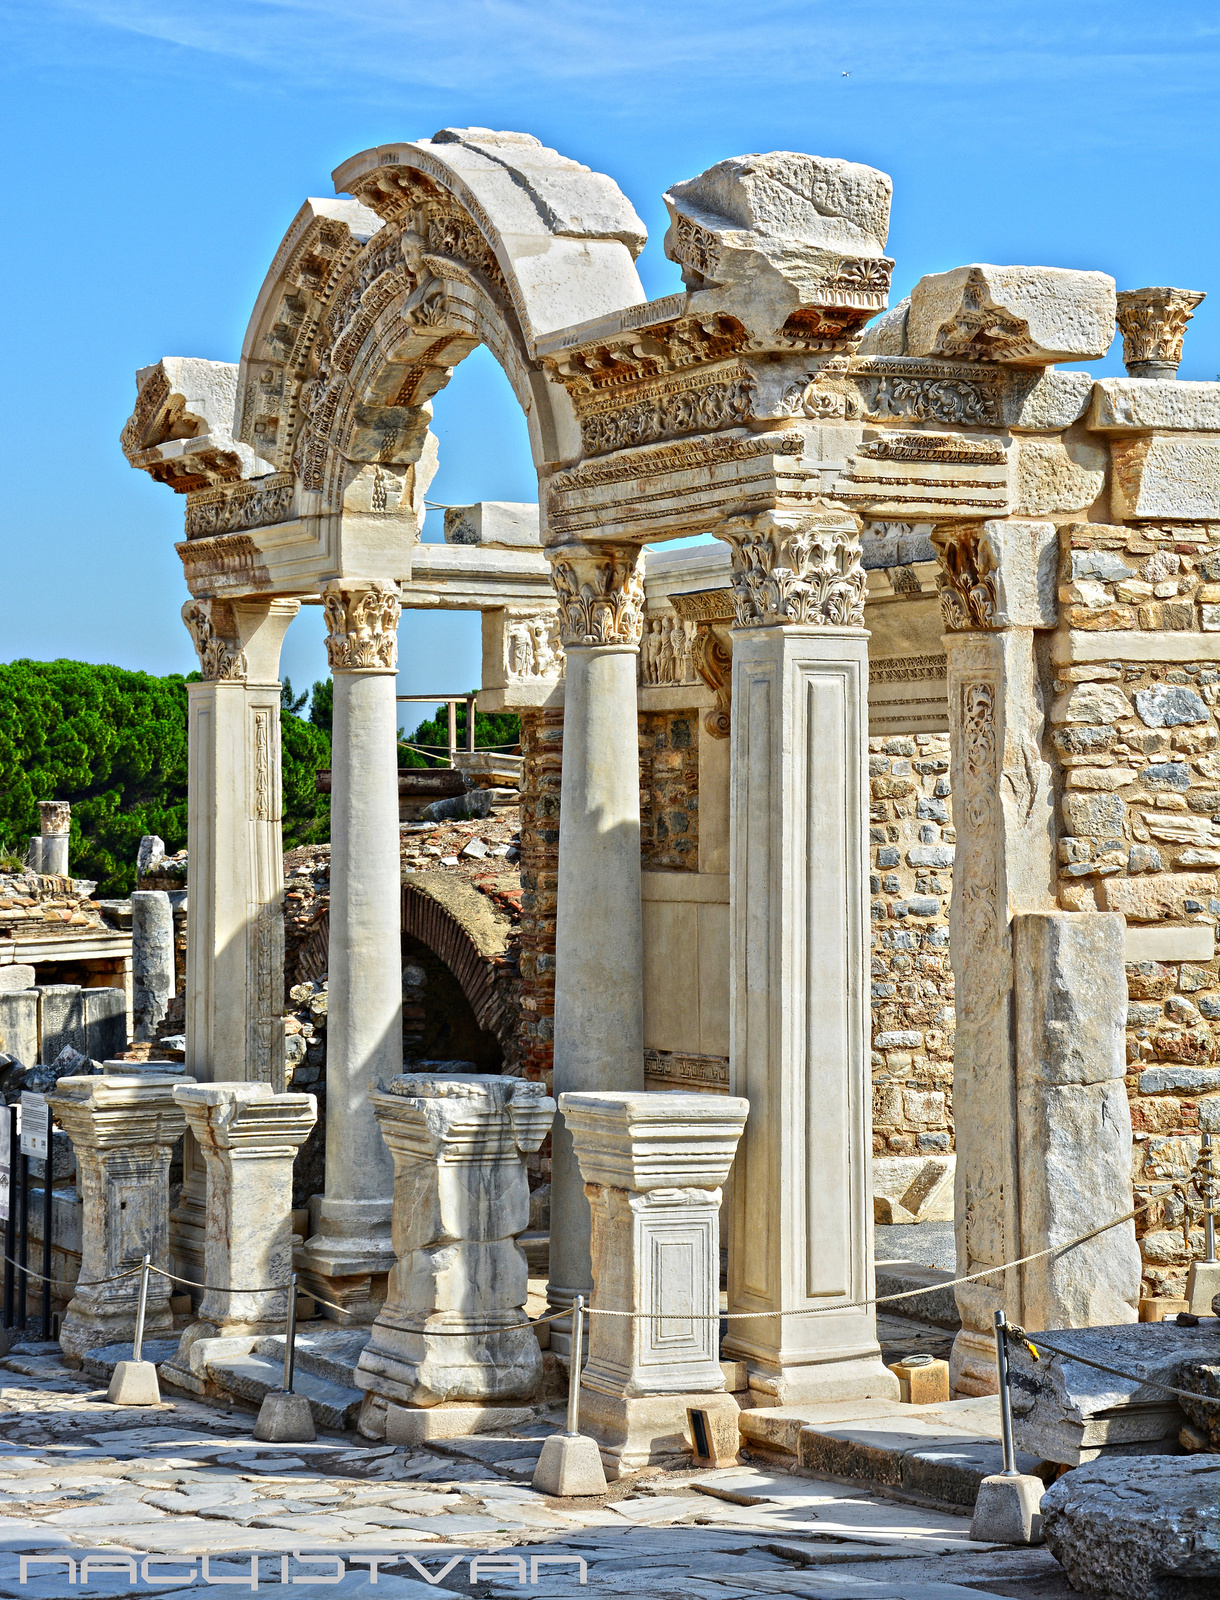 Efesus - Turkey 2015 292